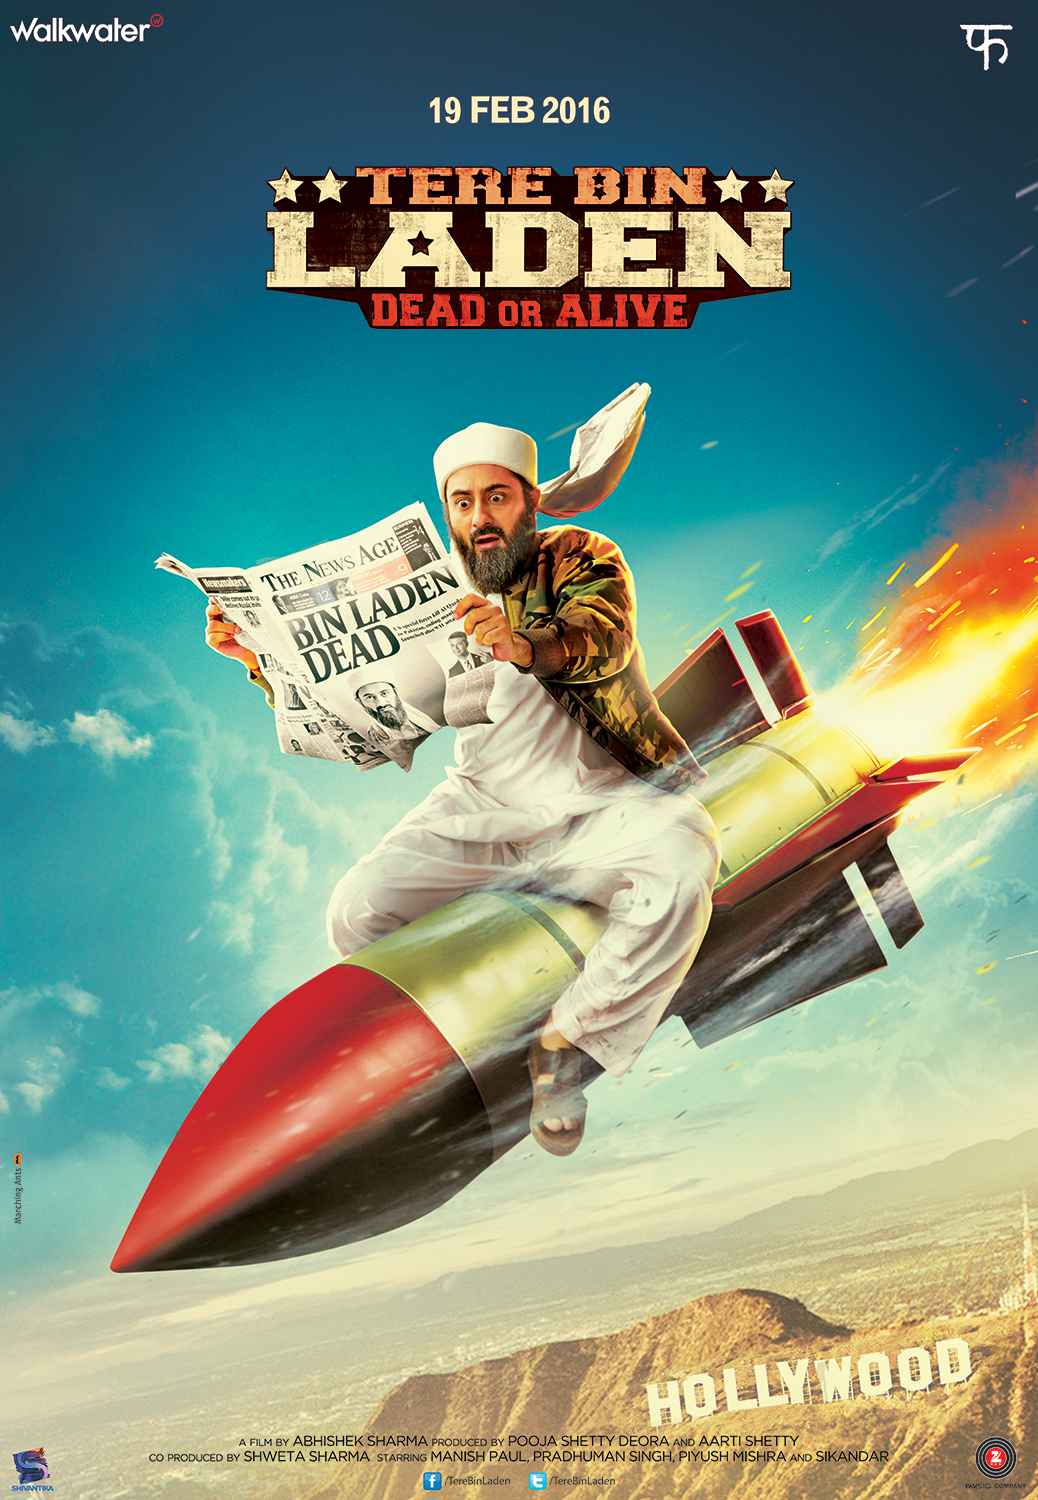 Tere Bin Laden Dead or Alive 2016 Pre DvD full movie download